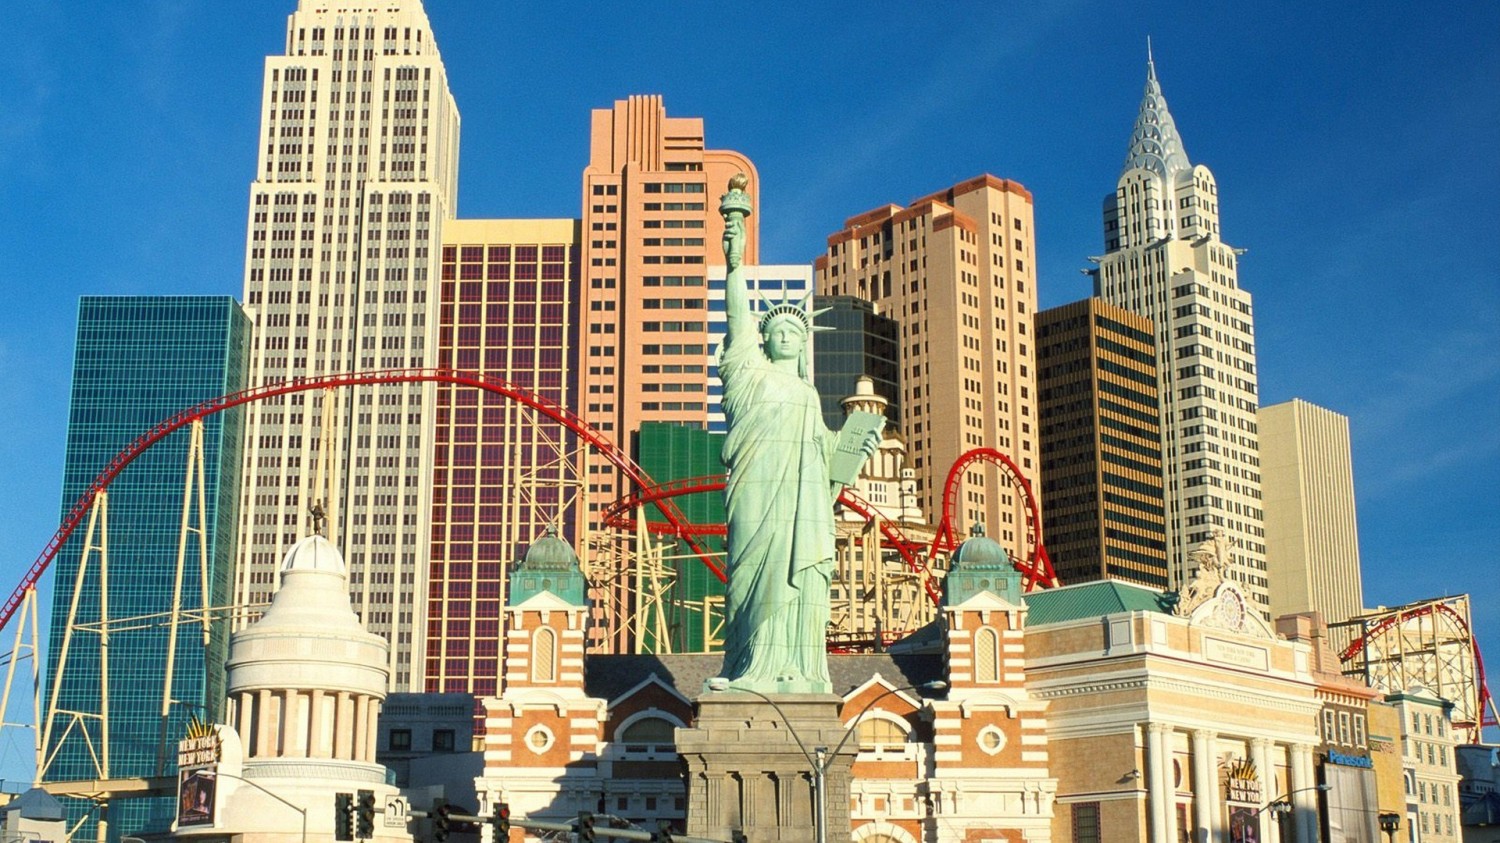 Las Vegas Casino New York HD Wallpaper Of City